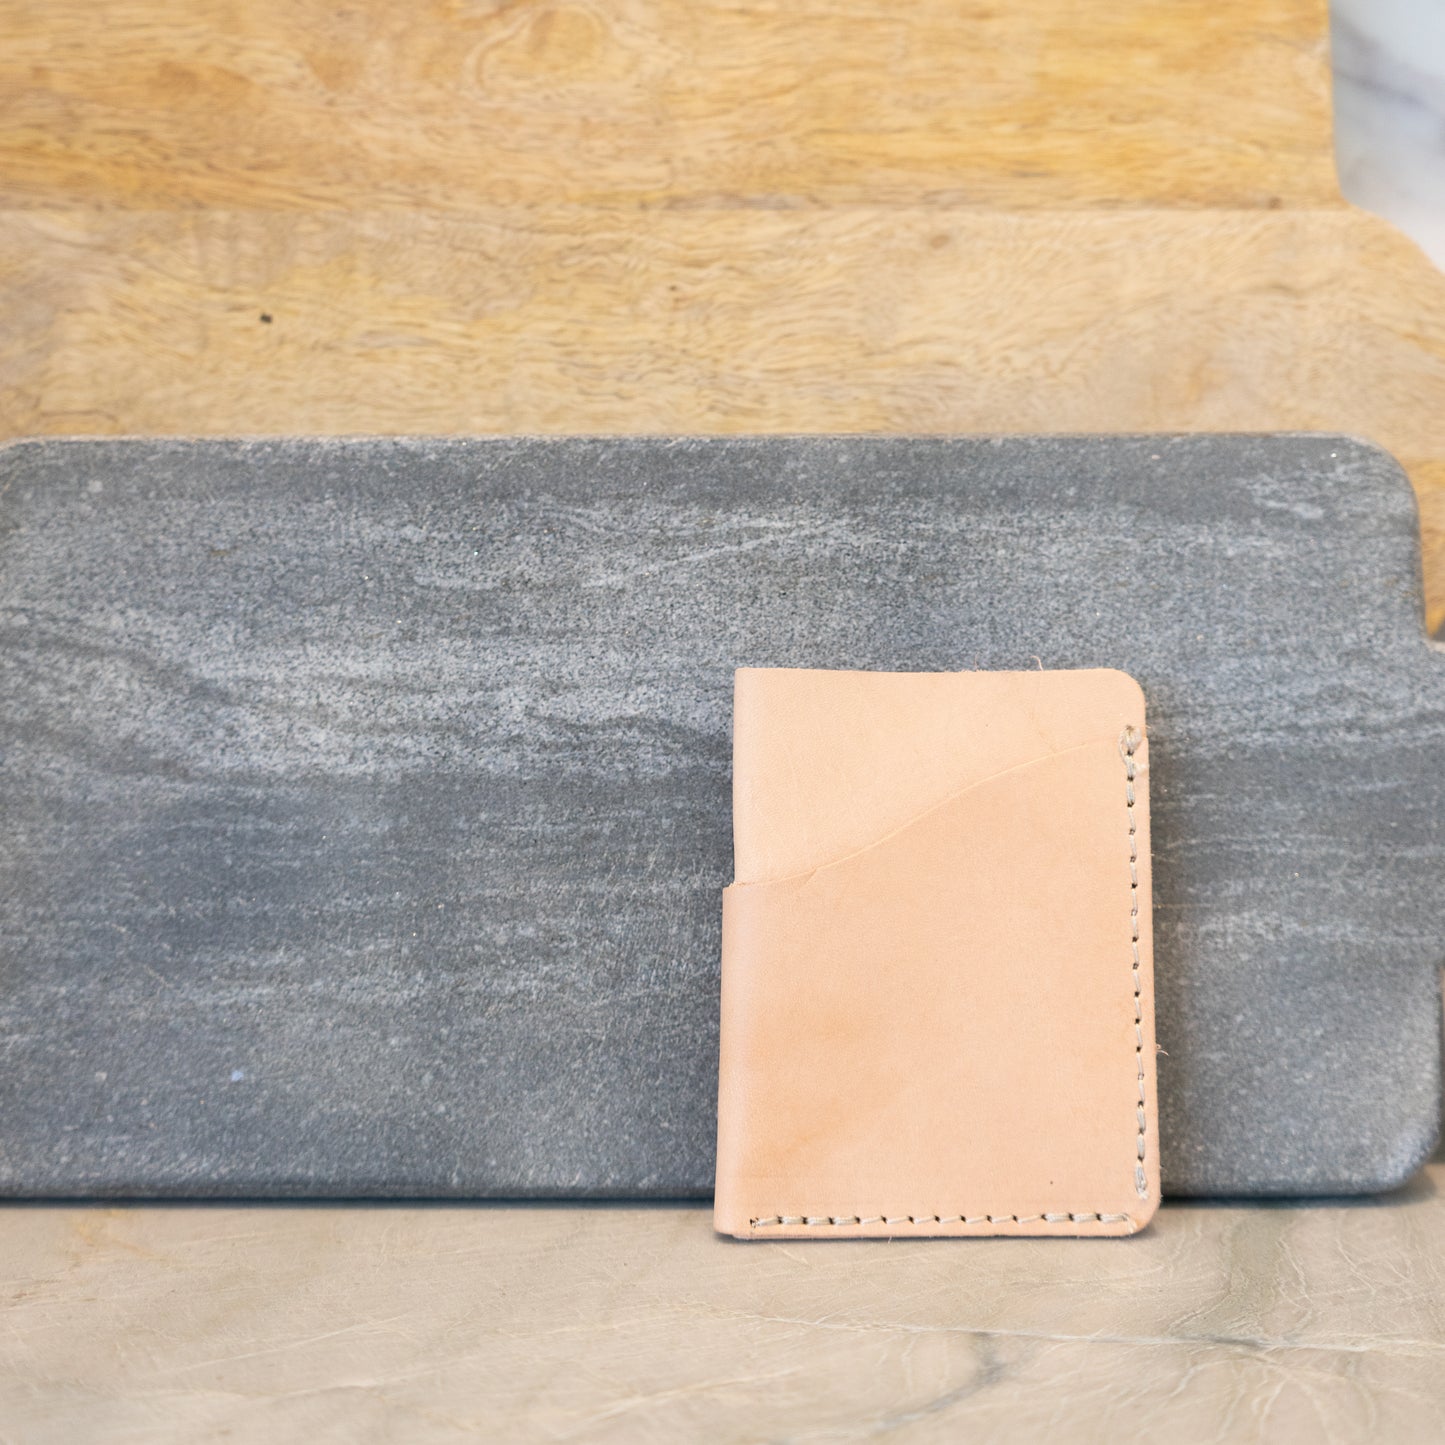 Rustico Wave Leather Wallet